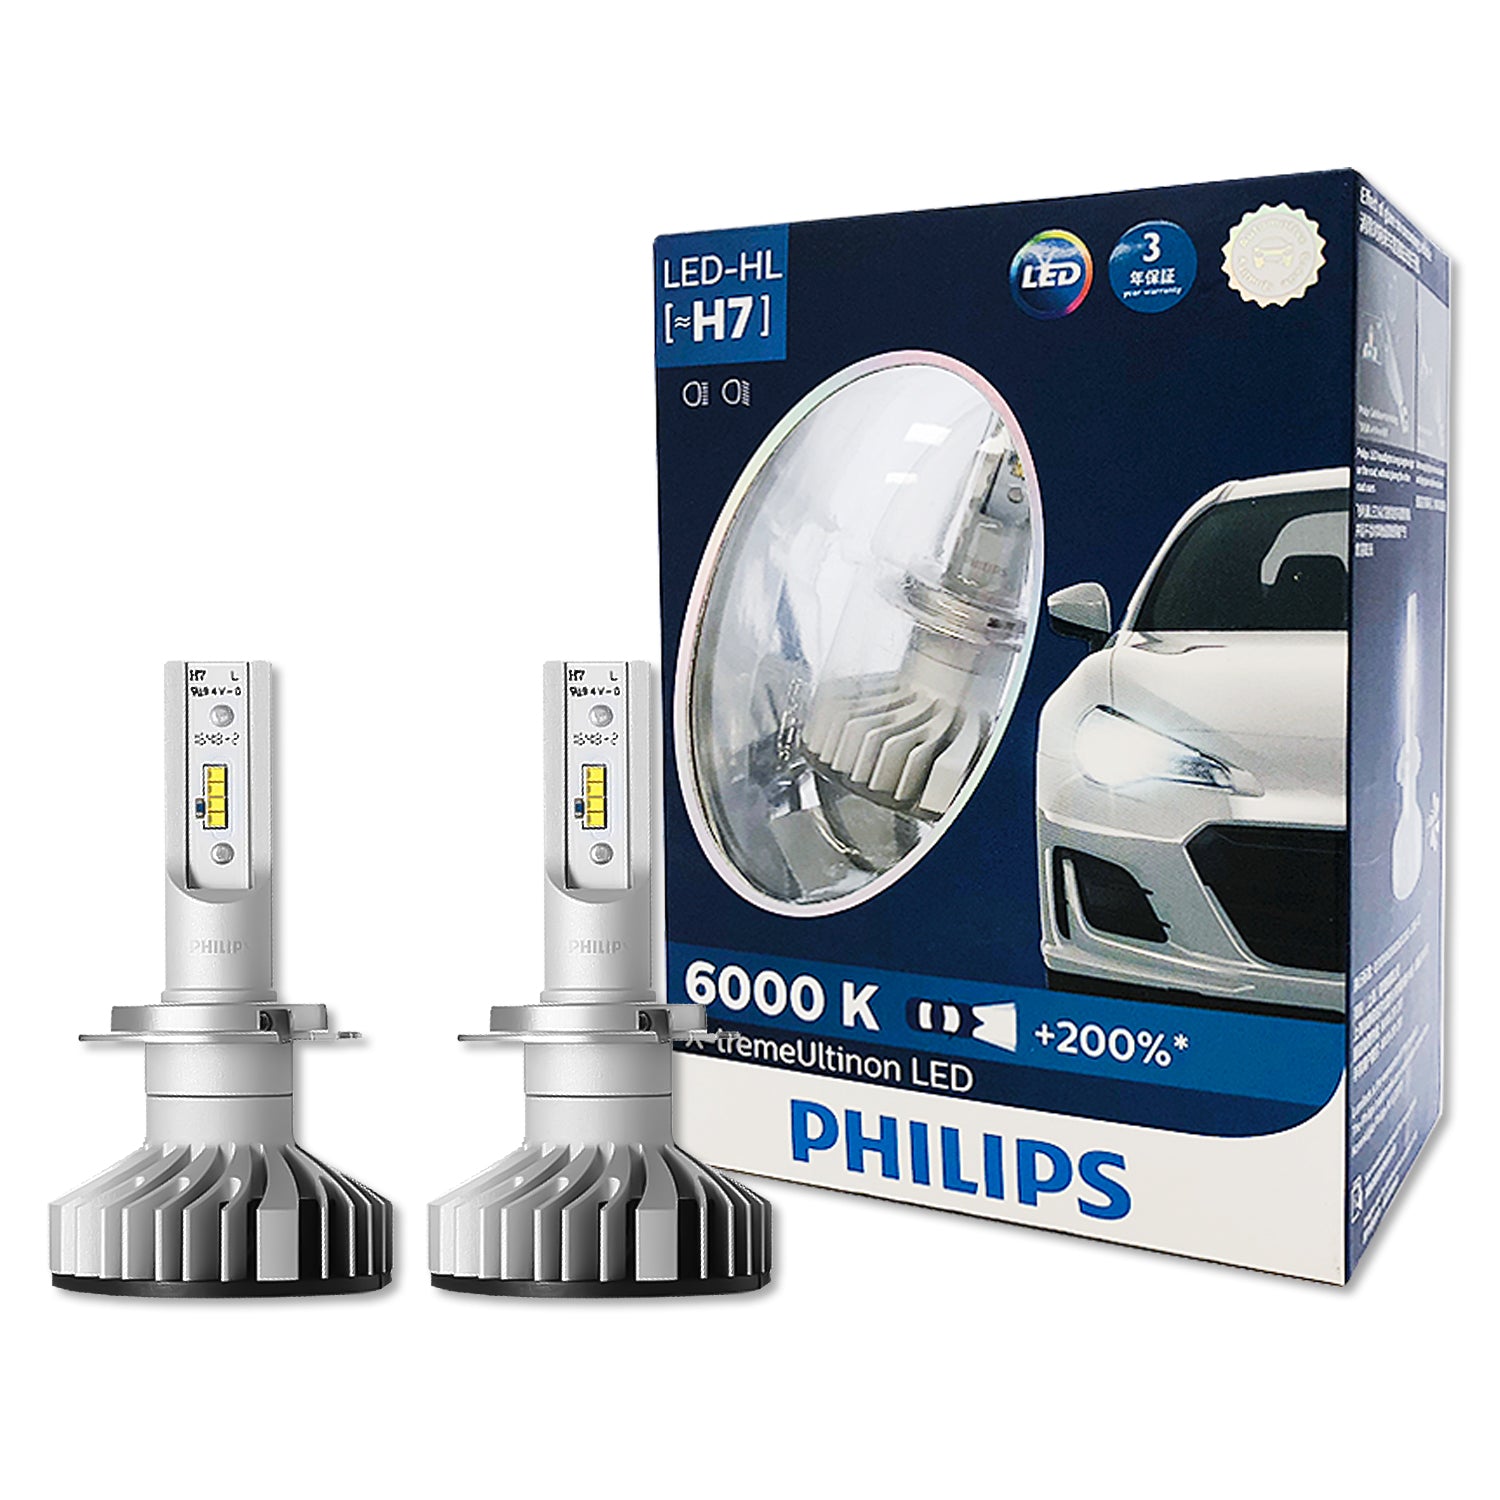 Philips LED H7 headlight bulbs - Parts, Tools & Equipment 